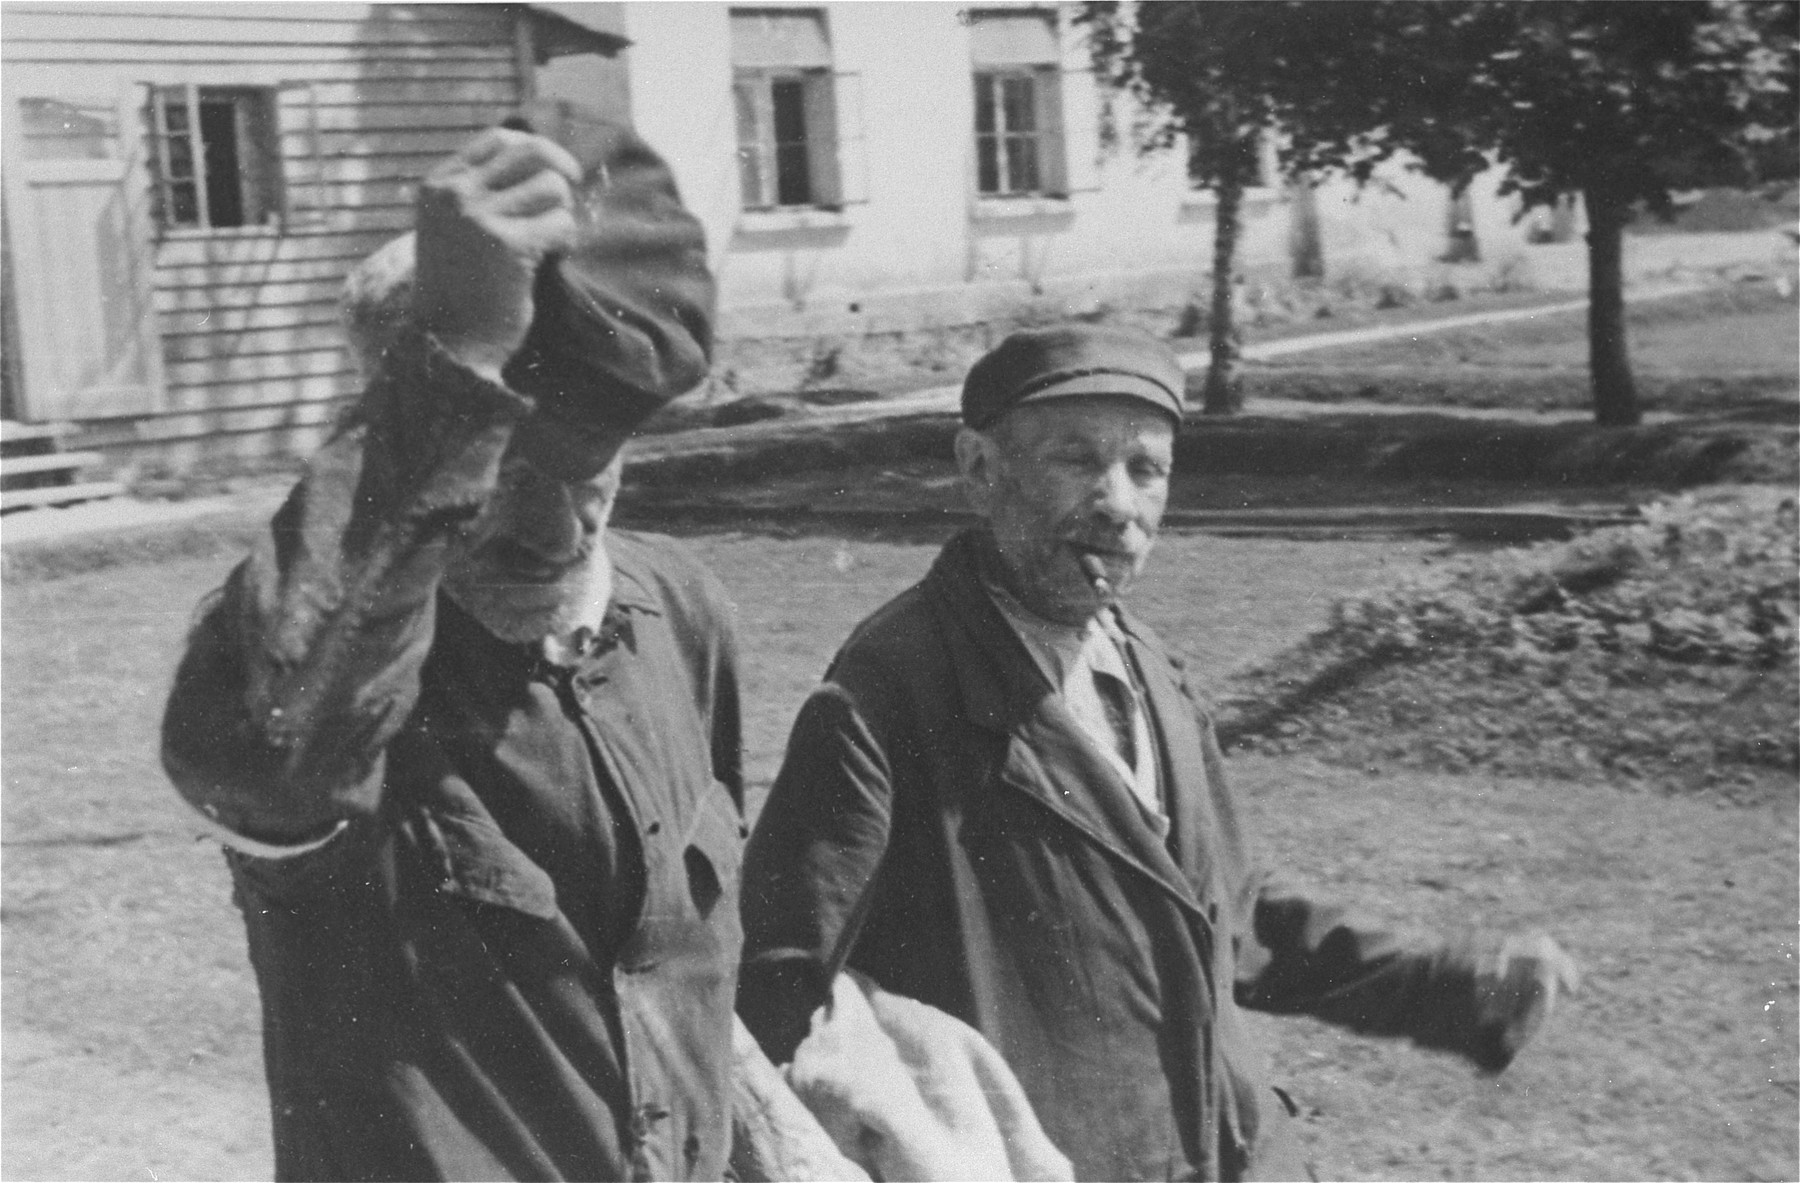 An elderly Jewish man doffs his hat as he walks outside with a companion in Konskowola.